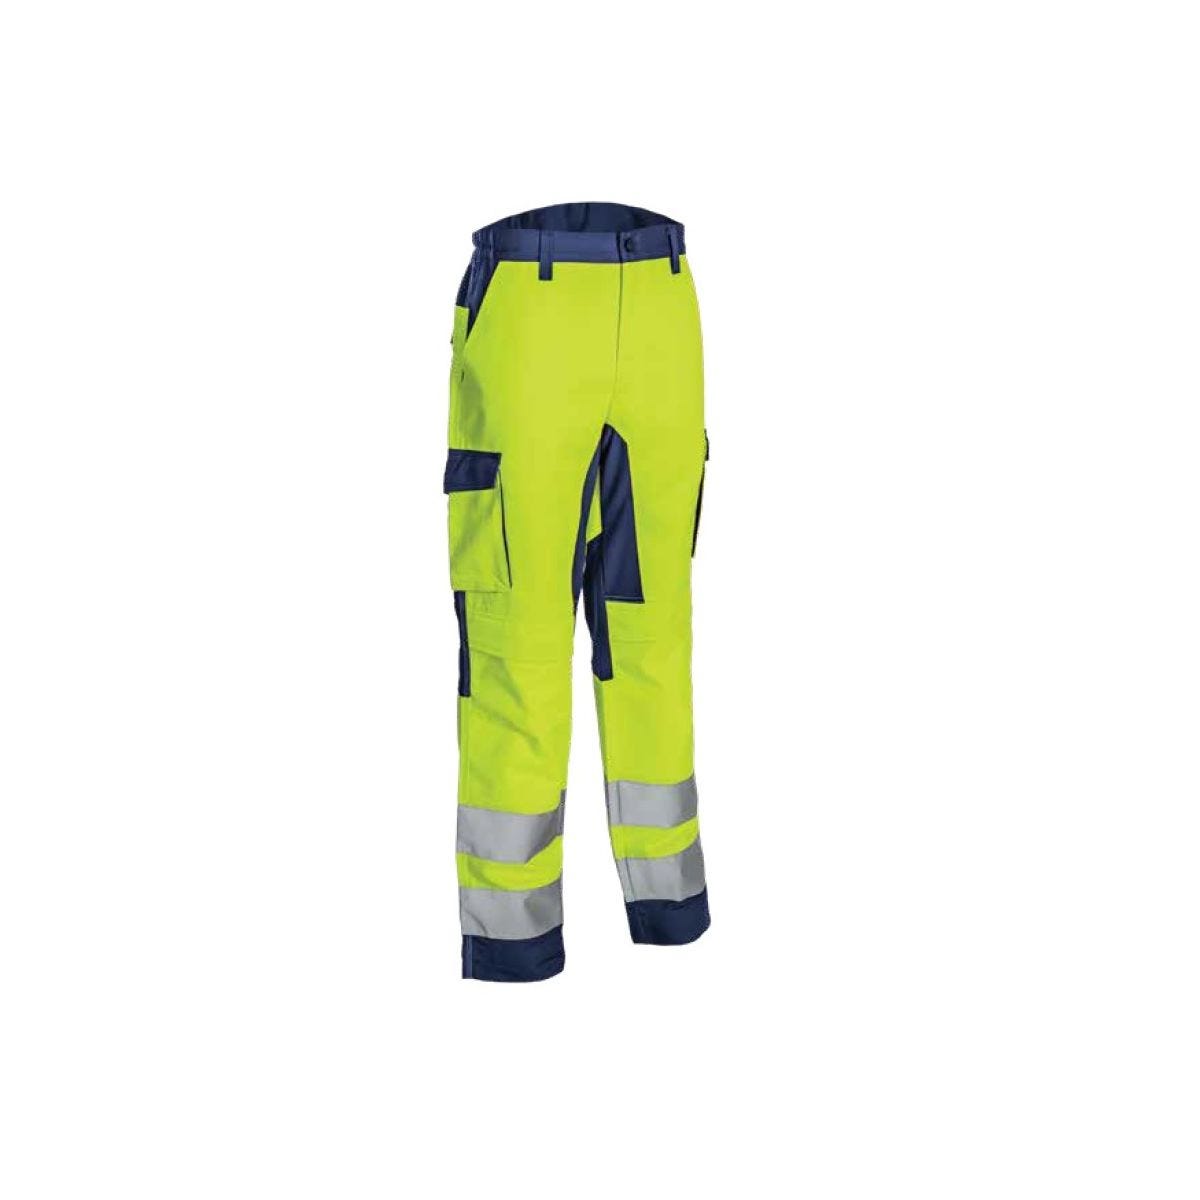 Pantalon haute visibilité HIBANA Jaune et Marine - Coverguard - Taille M 0